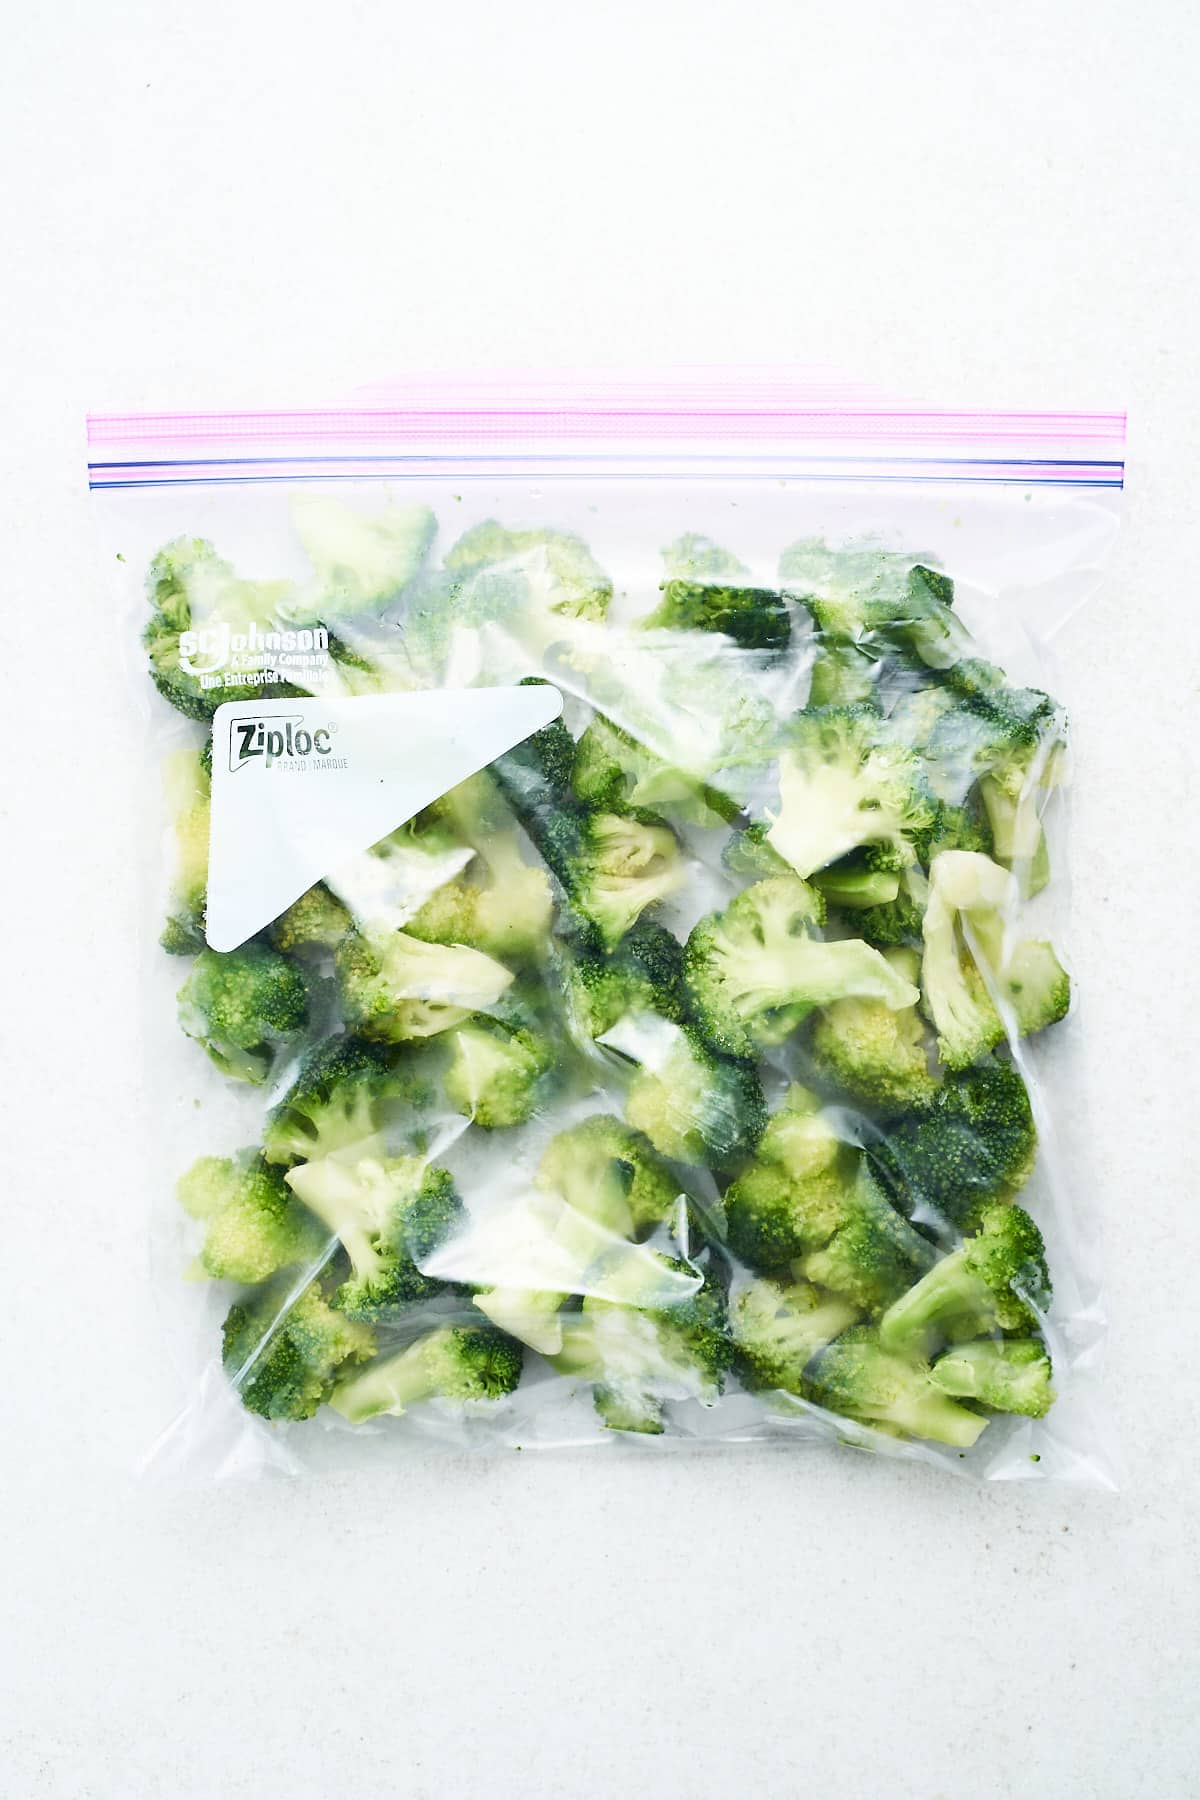 Frozen broccoli in a freezer bag.